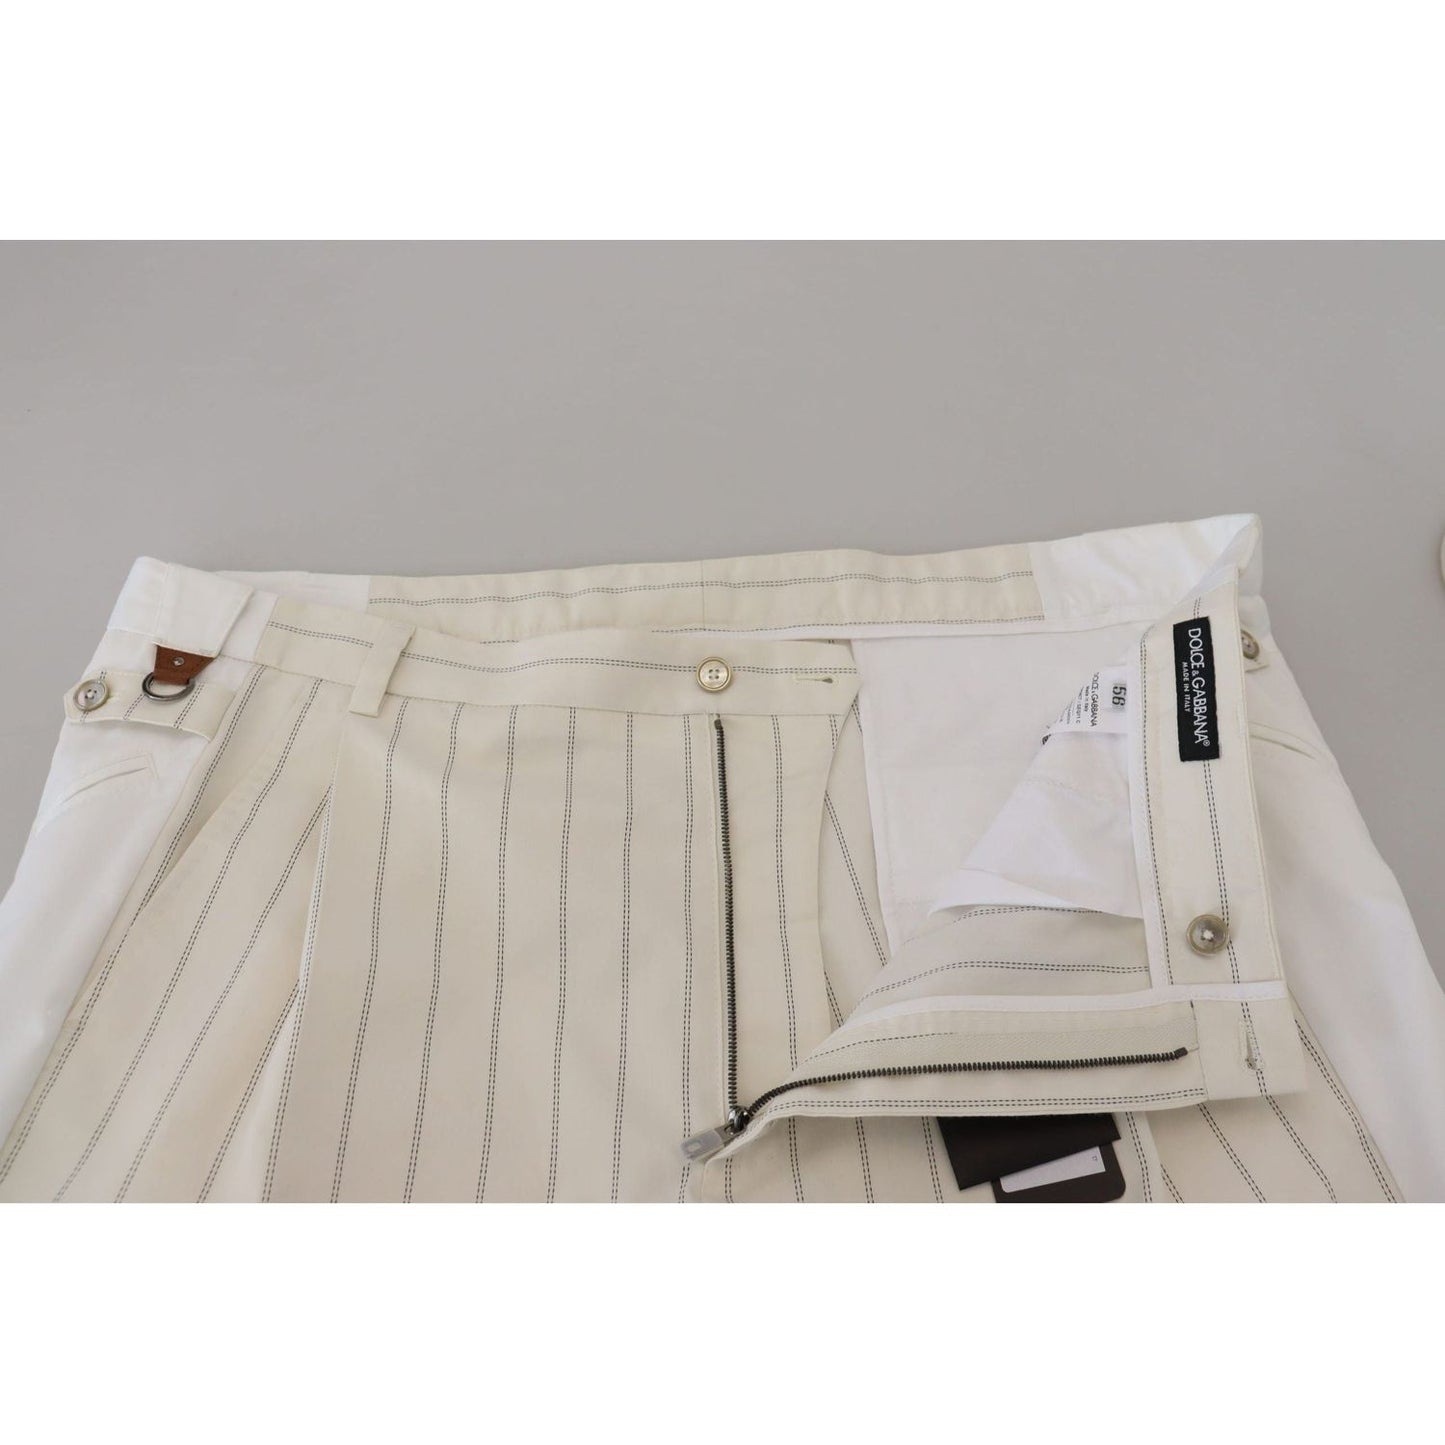 Dolce & Gabbana Elegant White Striped MainLine Trousers white-cotton-striped-formal-pants